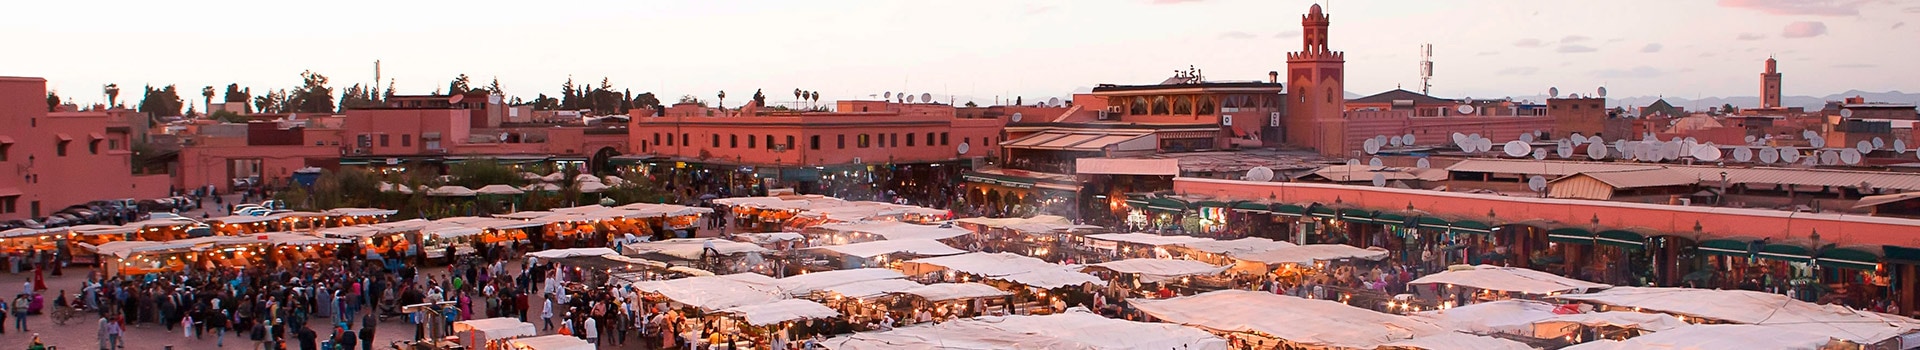 Geneva - Marrakech